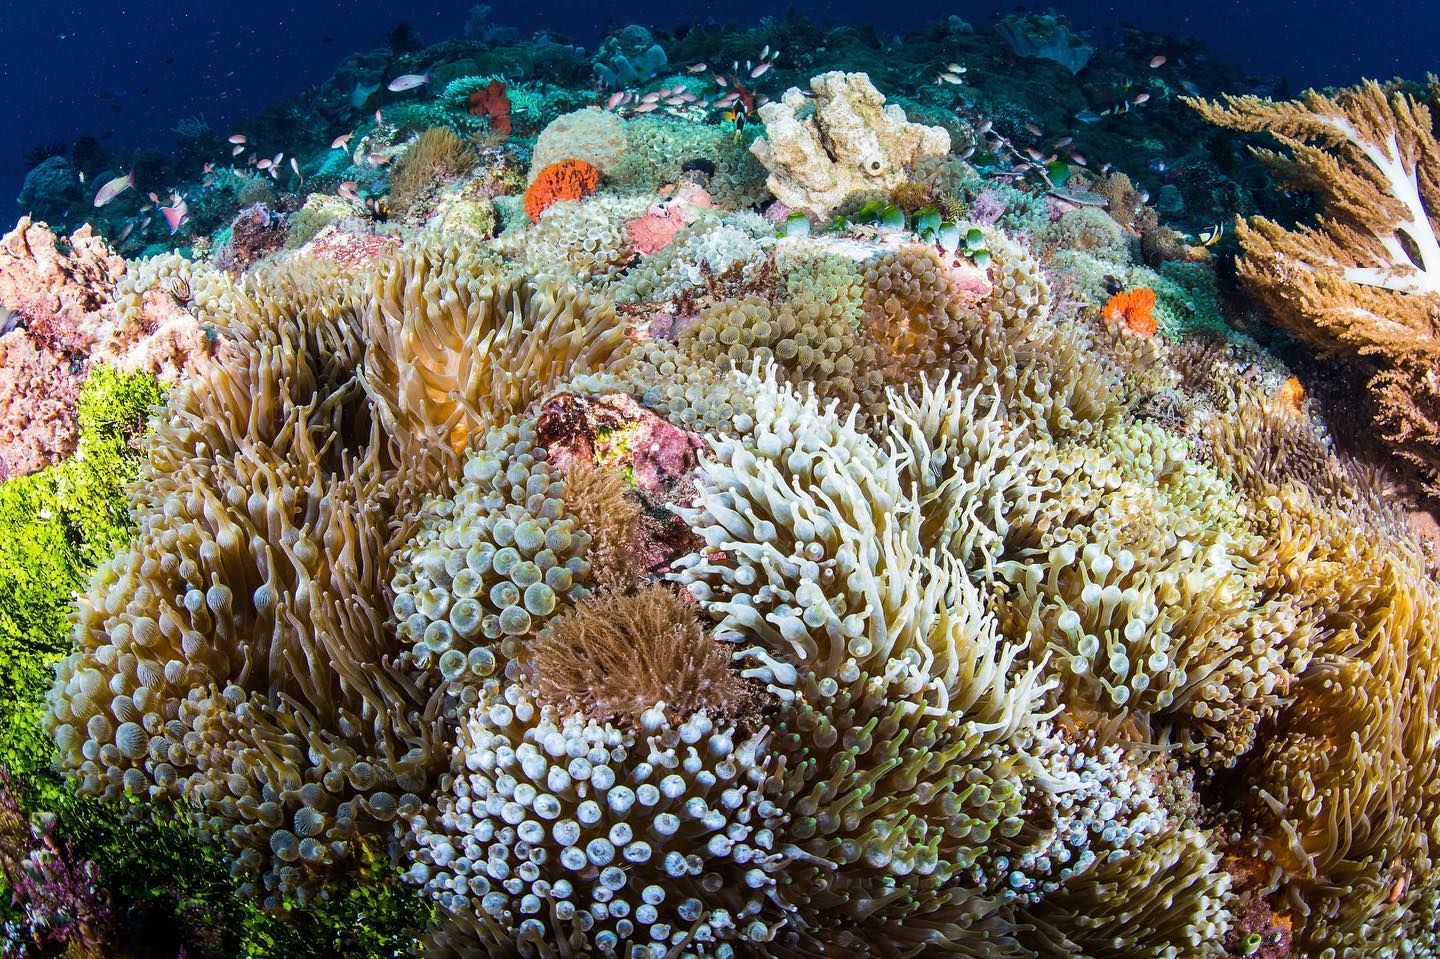 【#Environment】協助珊瑚礁迅速生長並進行培植復育，環保組織Coral Vita成立陸地珊瑚農場恢復海洋美麗生態系